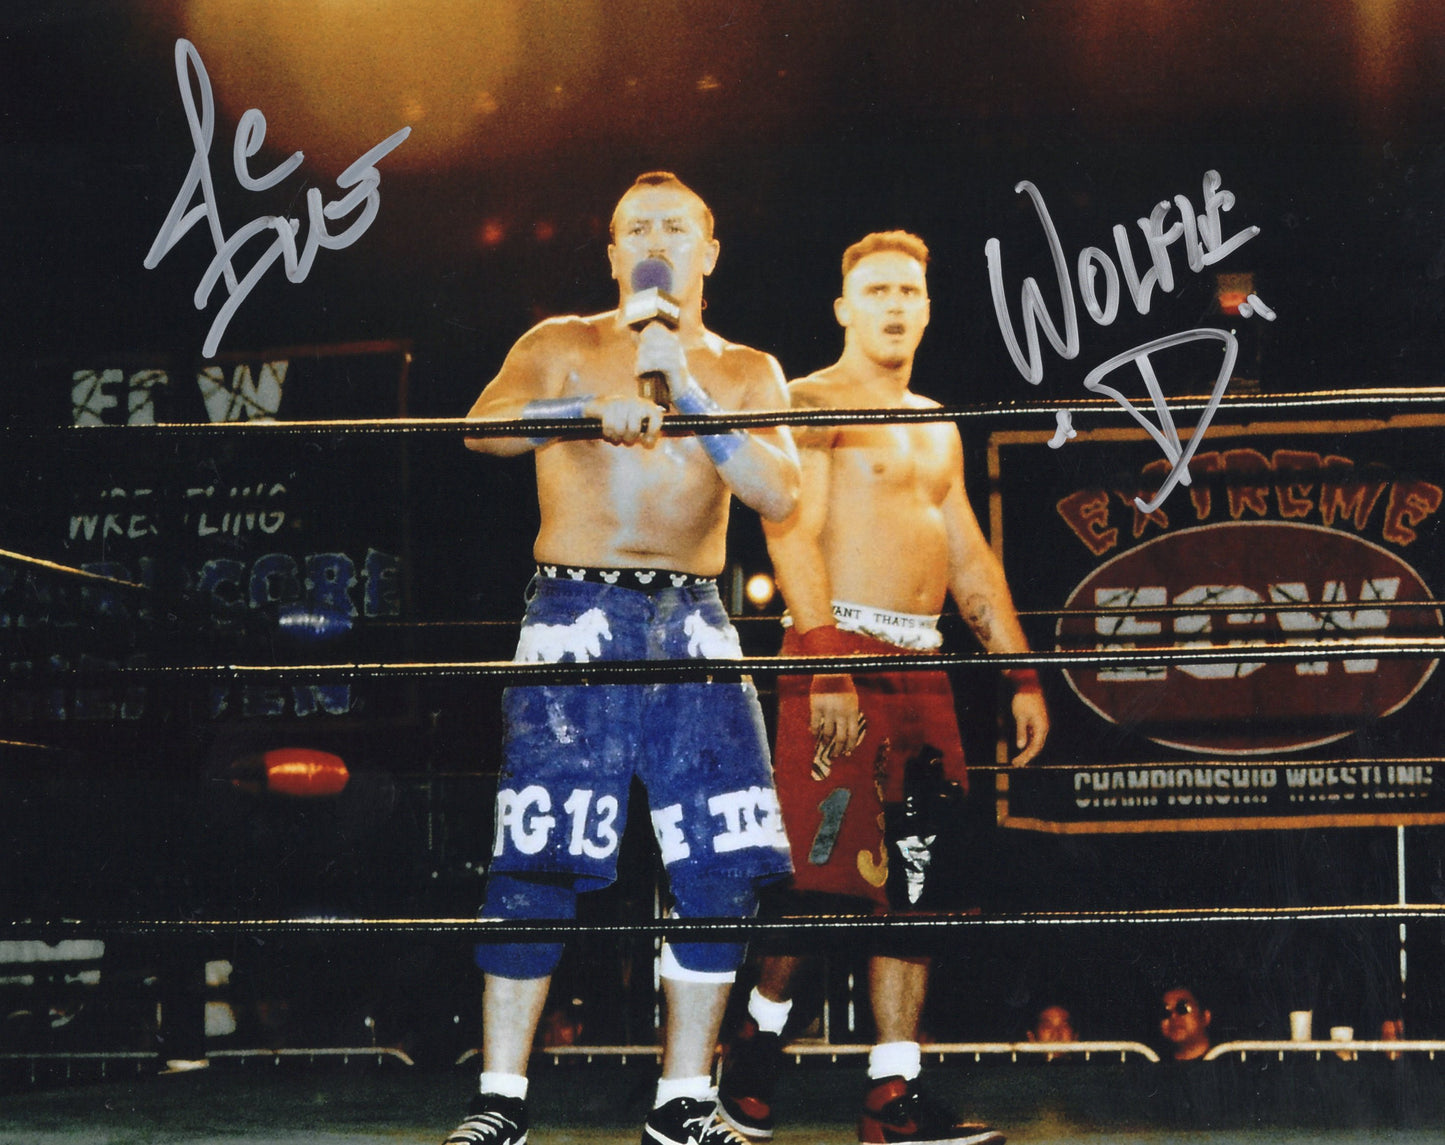 PG-13 8x10 WWF  ECW  8x10 photo signed auto autographed JC Ice Wolfie D